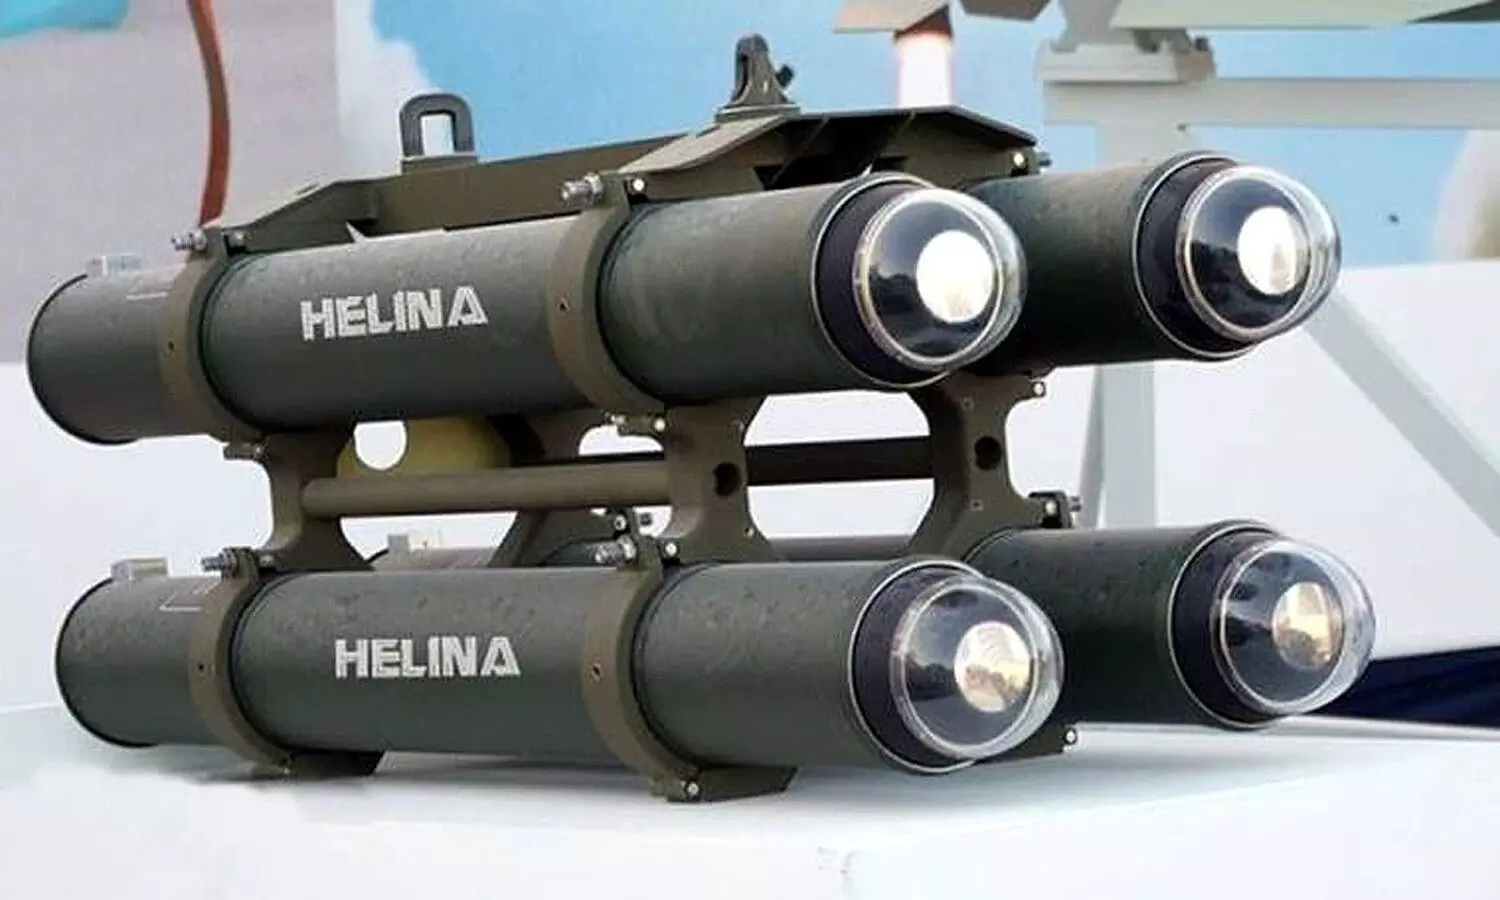 Helina missile